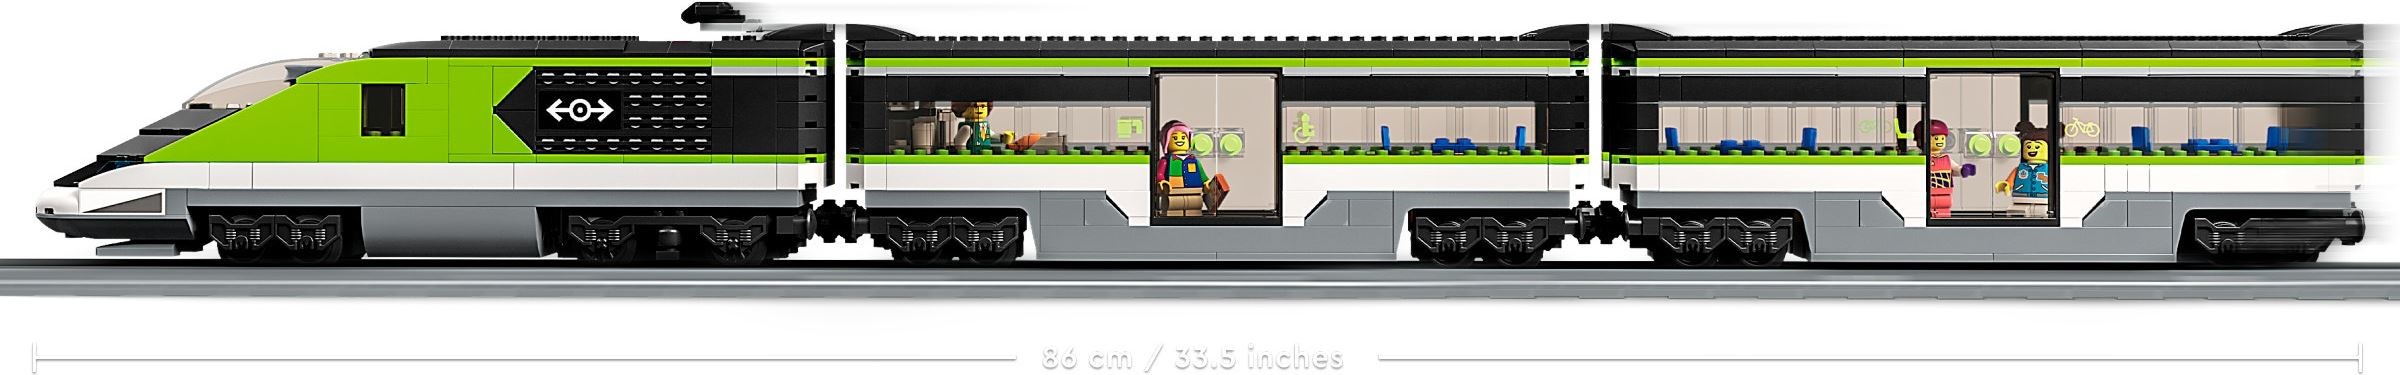 LEGO 60337 express Passenger Train - LEGO City - BricksDirect